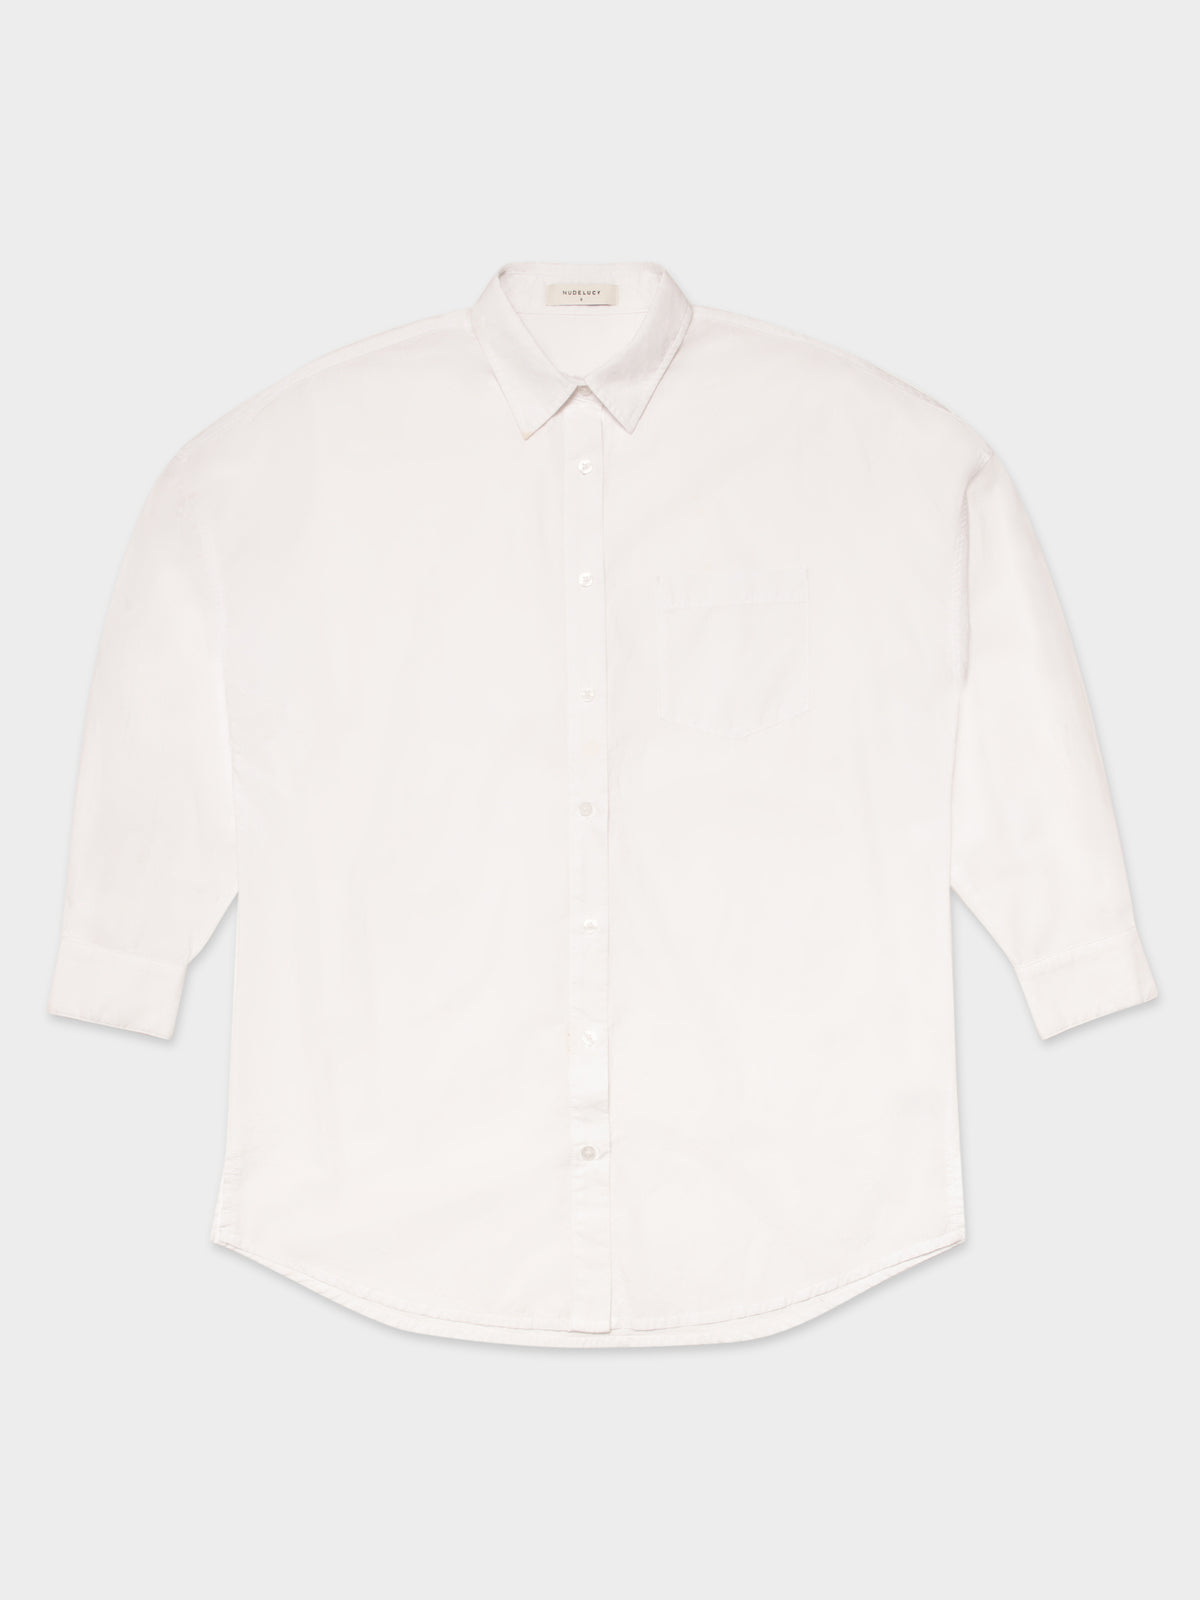 Naya Cotton Longline Shirt in White